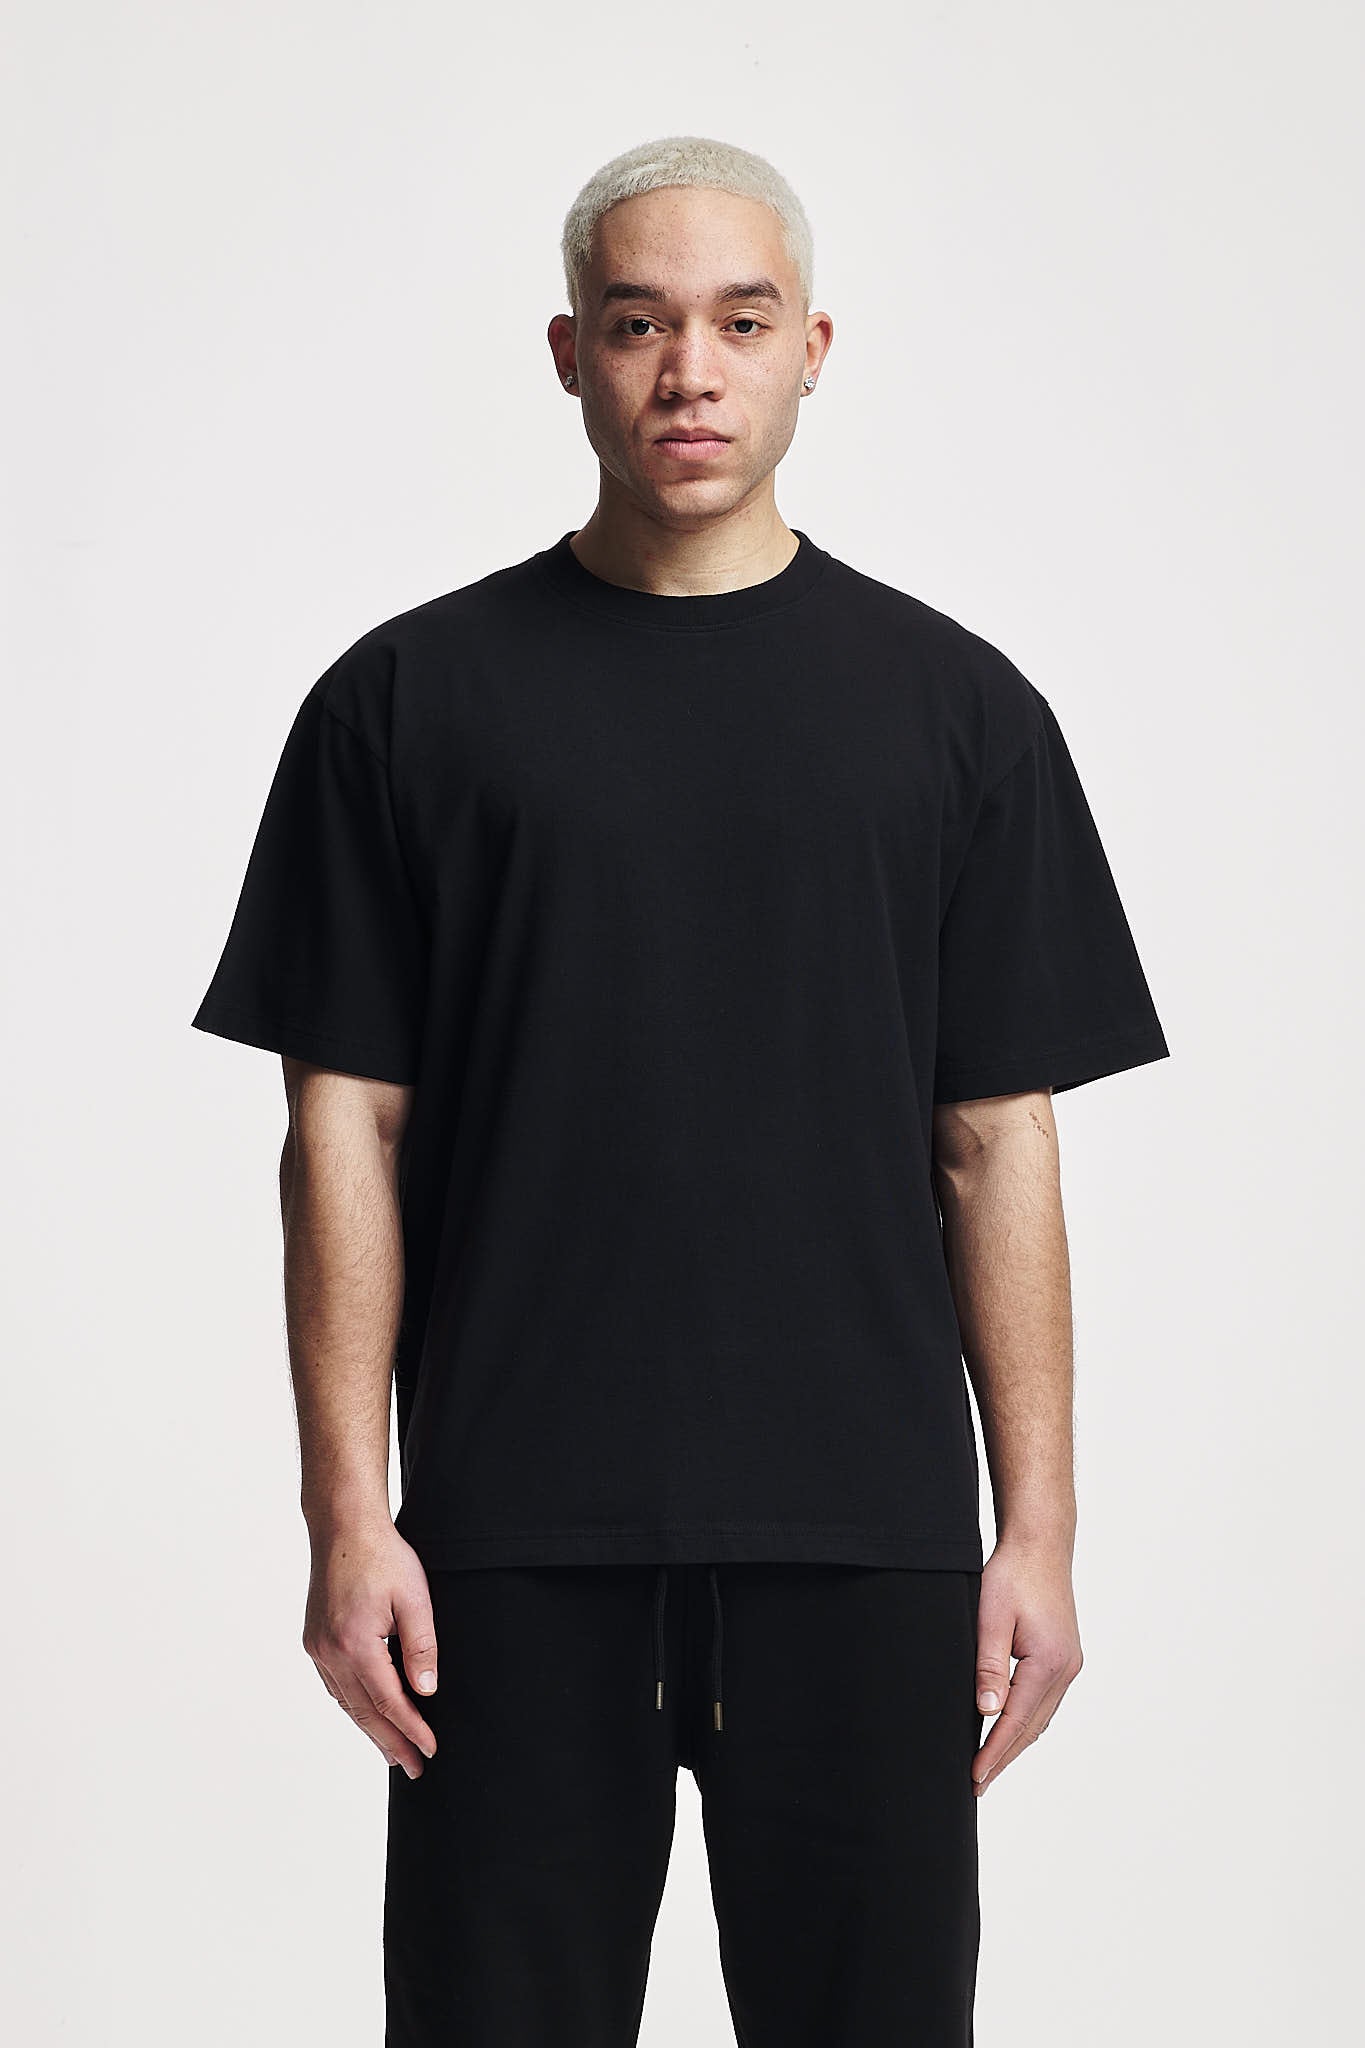 3.0 Oversized T Shirt - Black's Code & Price - RblxTrade